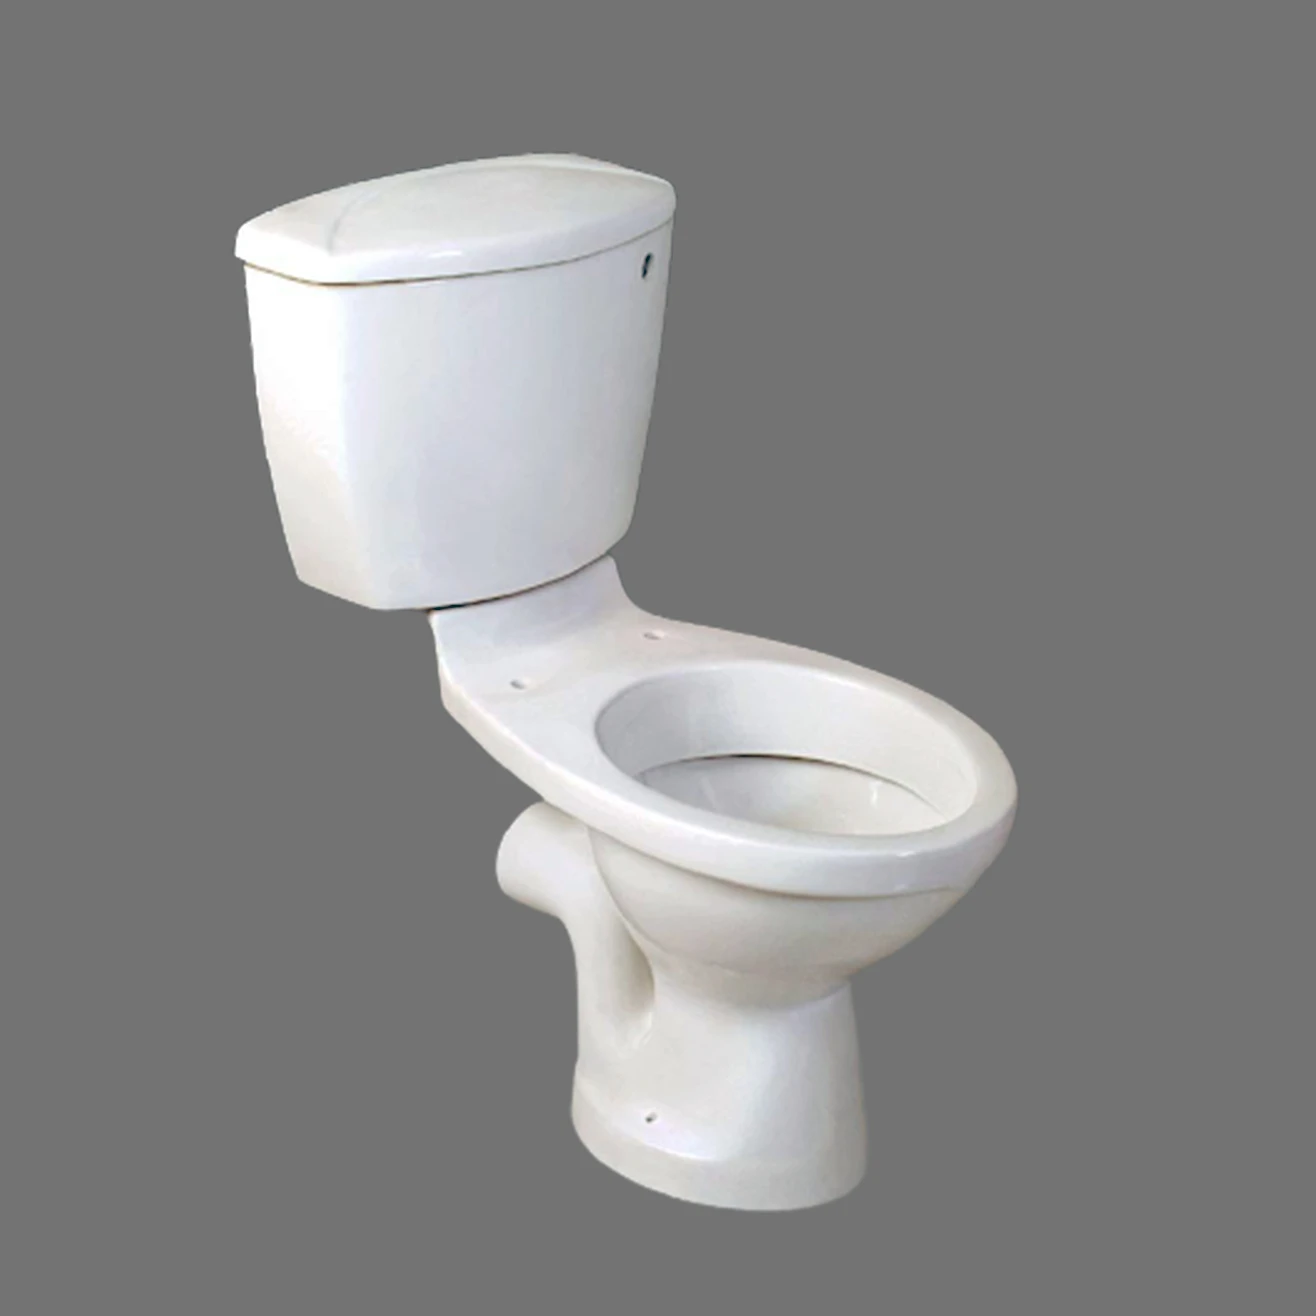 Hoge Kwaliteit Sifon Water Closet S Met Wc - Buy Water Closet Toilet,Sanitair Wc,Een Product on Alibaba.com